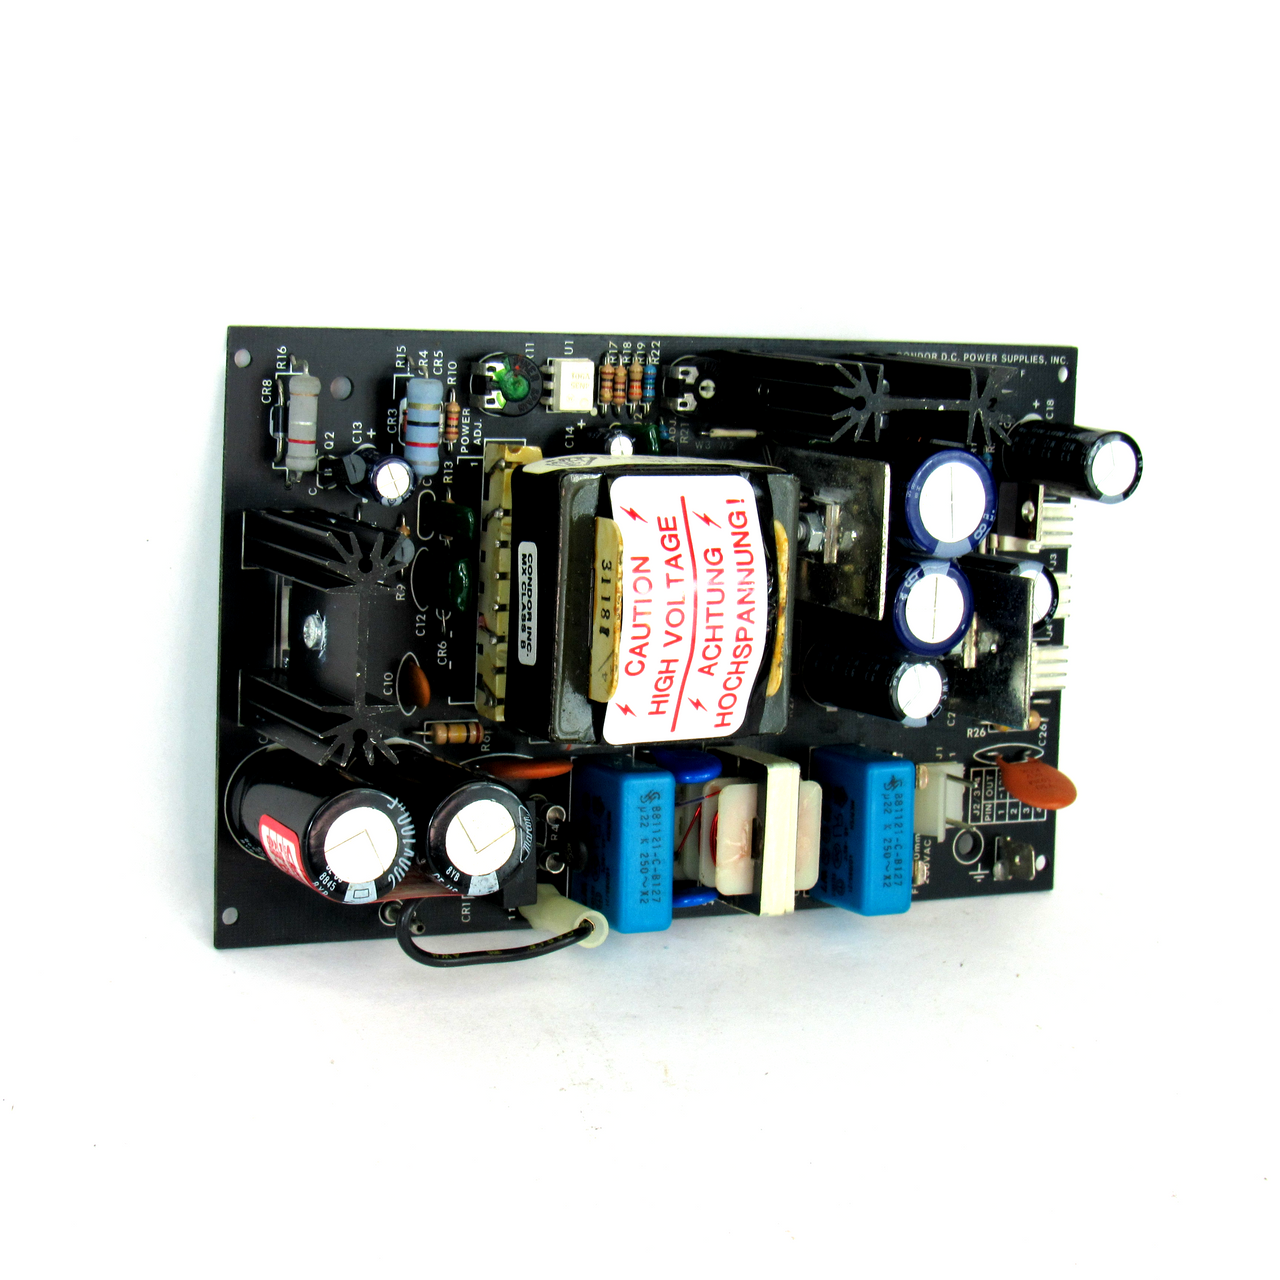 Condor 02-31180-0001 DC Power Supply, Rev. F, NEW